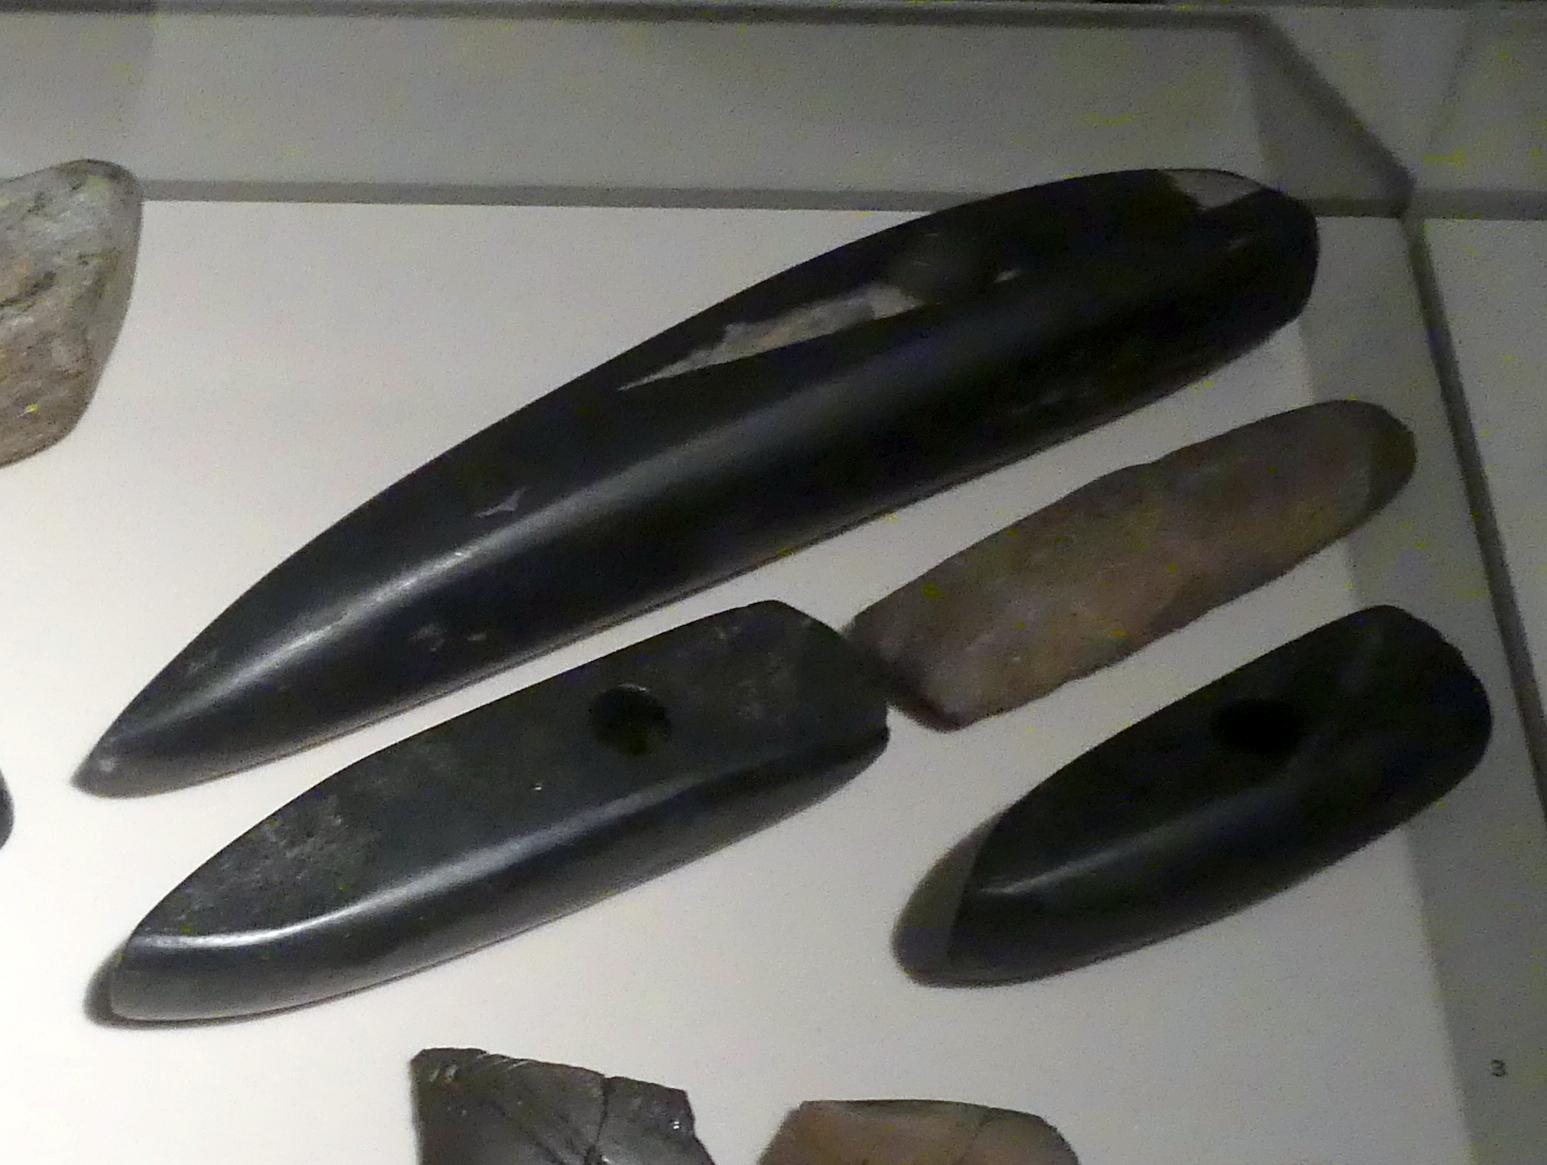 Schuhleistenkeile, Frühneolithikum (Altneolithikum), 5500 - 4900 v. Chr., 5500 - 5000 v. Chr., Bild 1/2